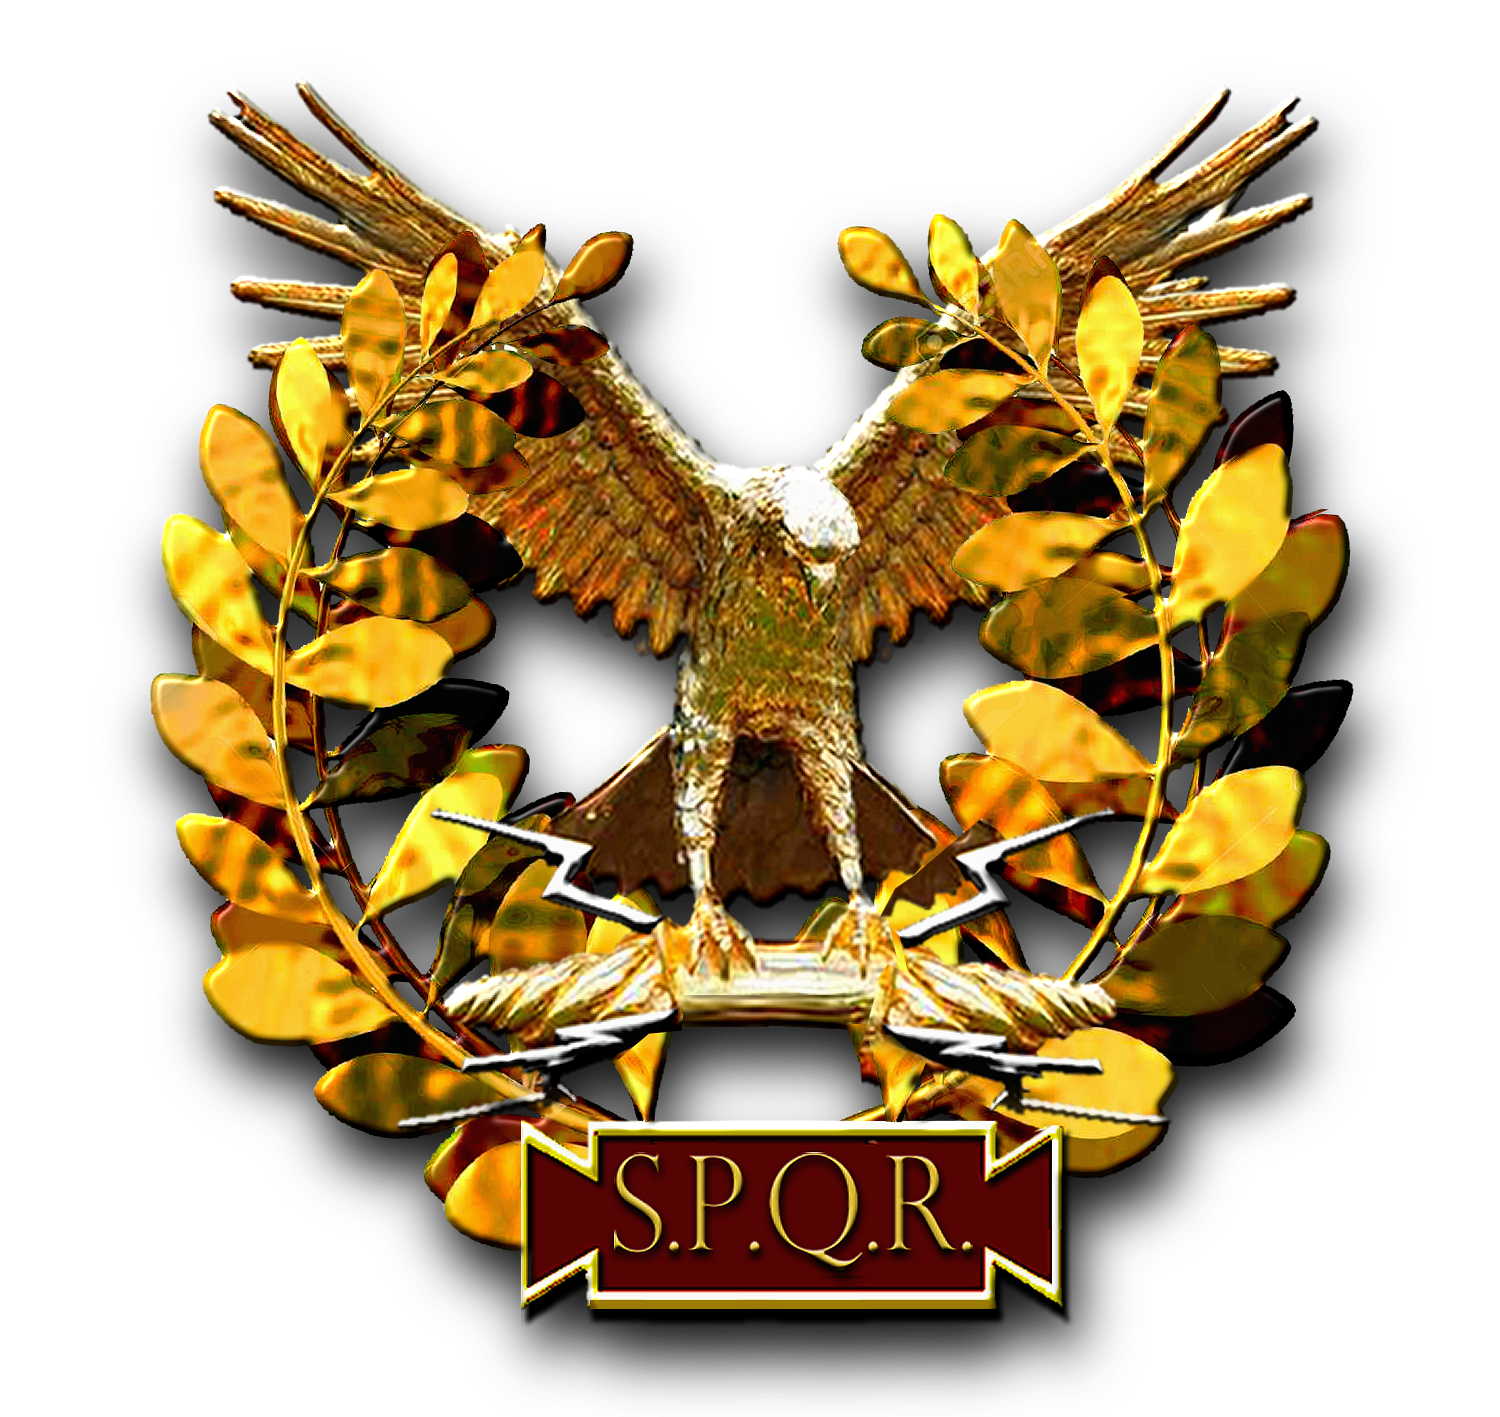 Знаки древнего рима. Орел легиона SPQR. Рим герб SPQR. Орел римской империи SPQR. Символ римской империи SPQR.